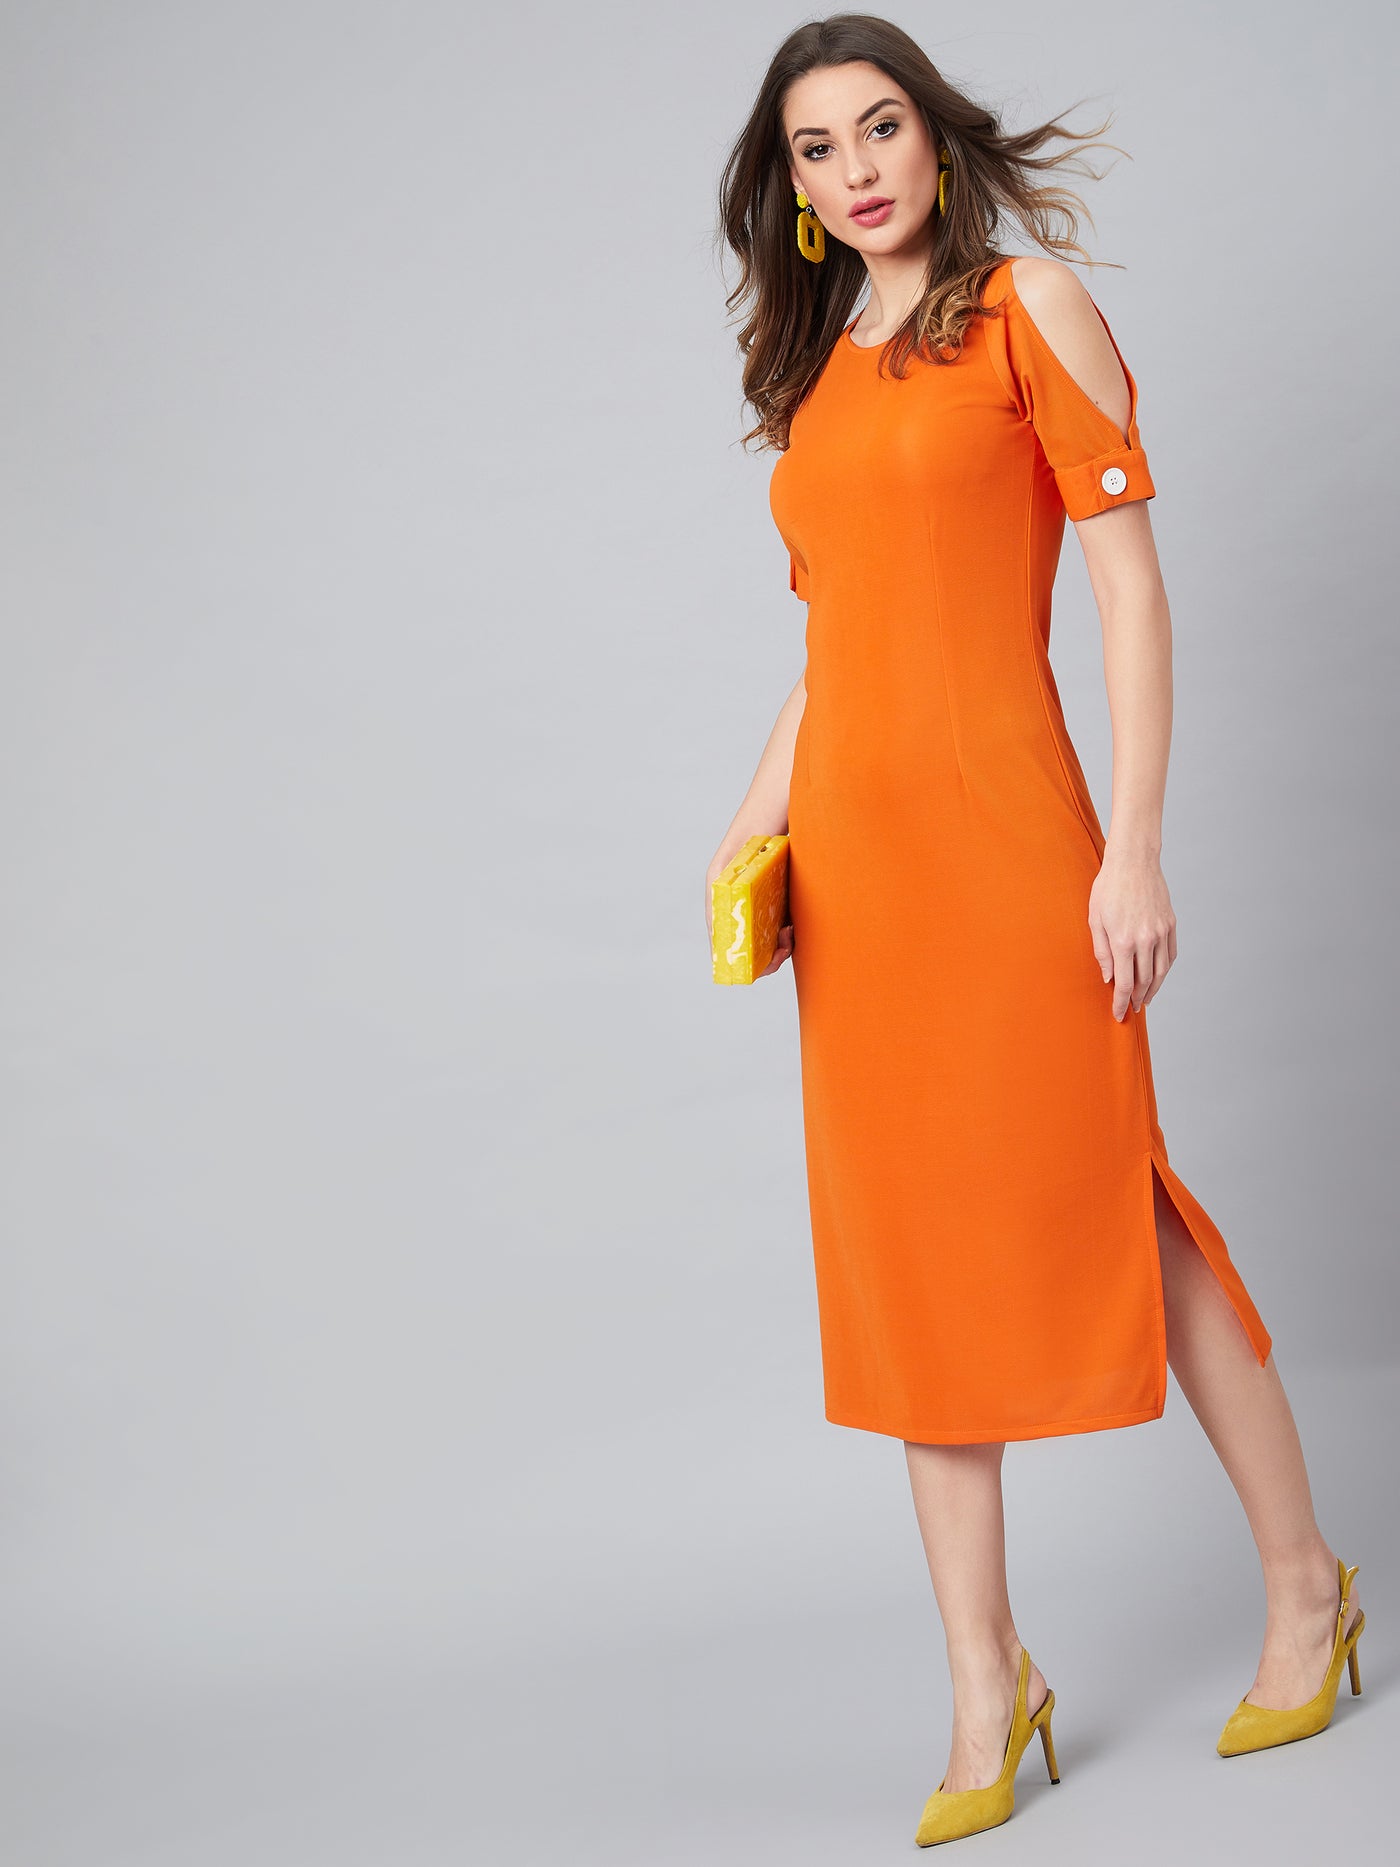 Athena Women Orange Solid Sheath Dress - Athena Lifestyle